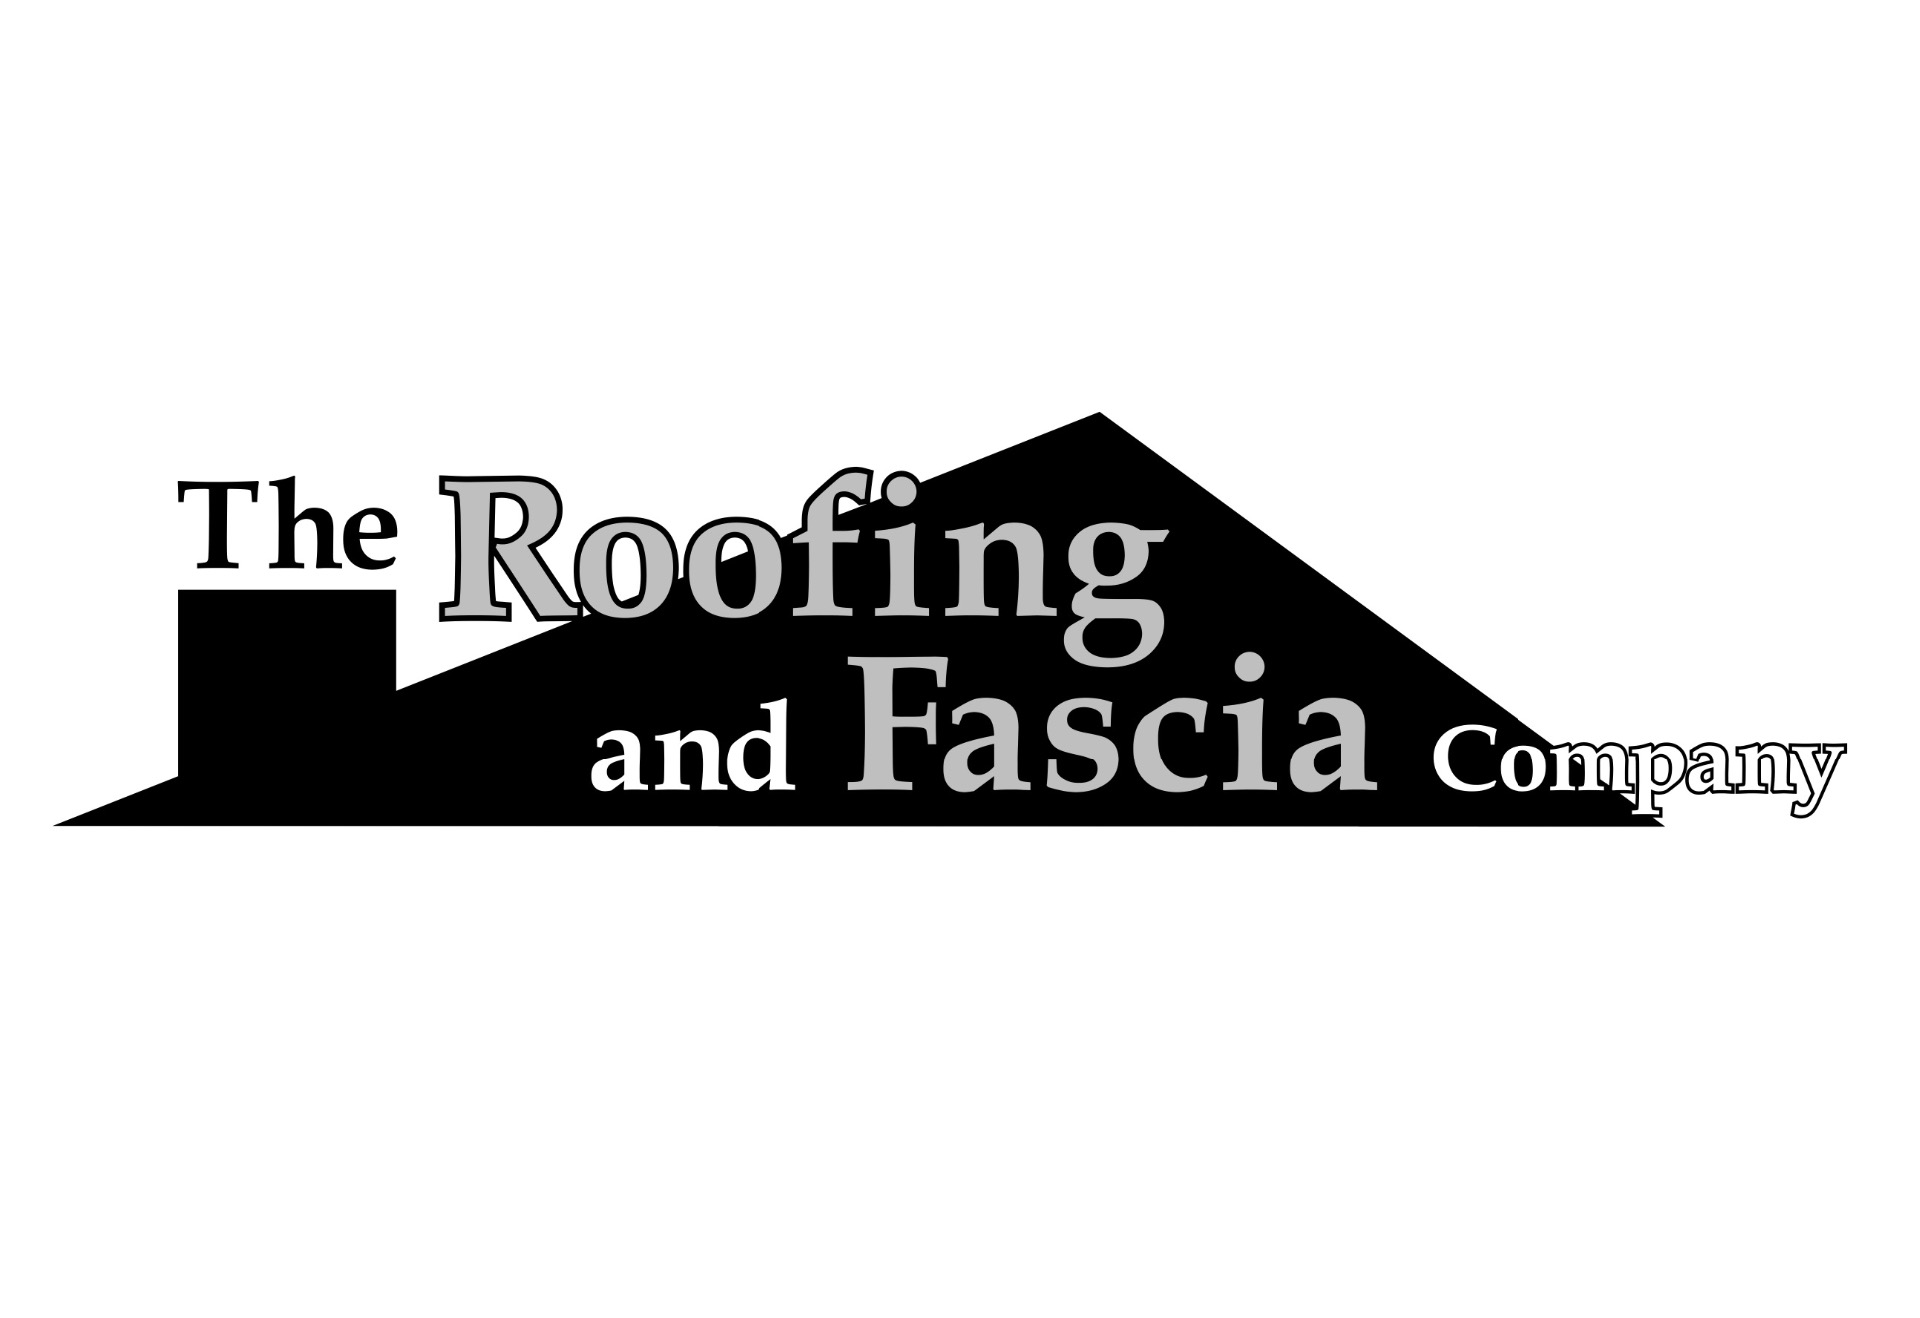 Flat Roof in Berkshire, Hampshire, Surrey, Fleet, camberley, Ascot, Farnborough, Aldershot, Hook, Ashvale, Deepcut, Wokingham, Crowthorne, Yateley, Frimley, Chobham, Reading, Woking, Fascias, Soffits and Guttering